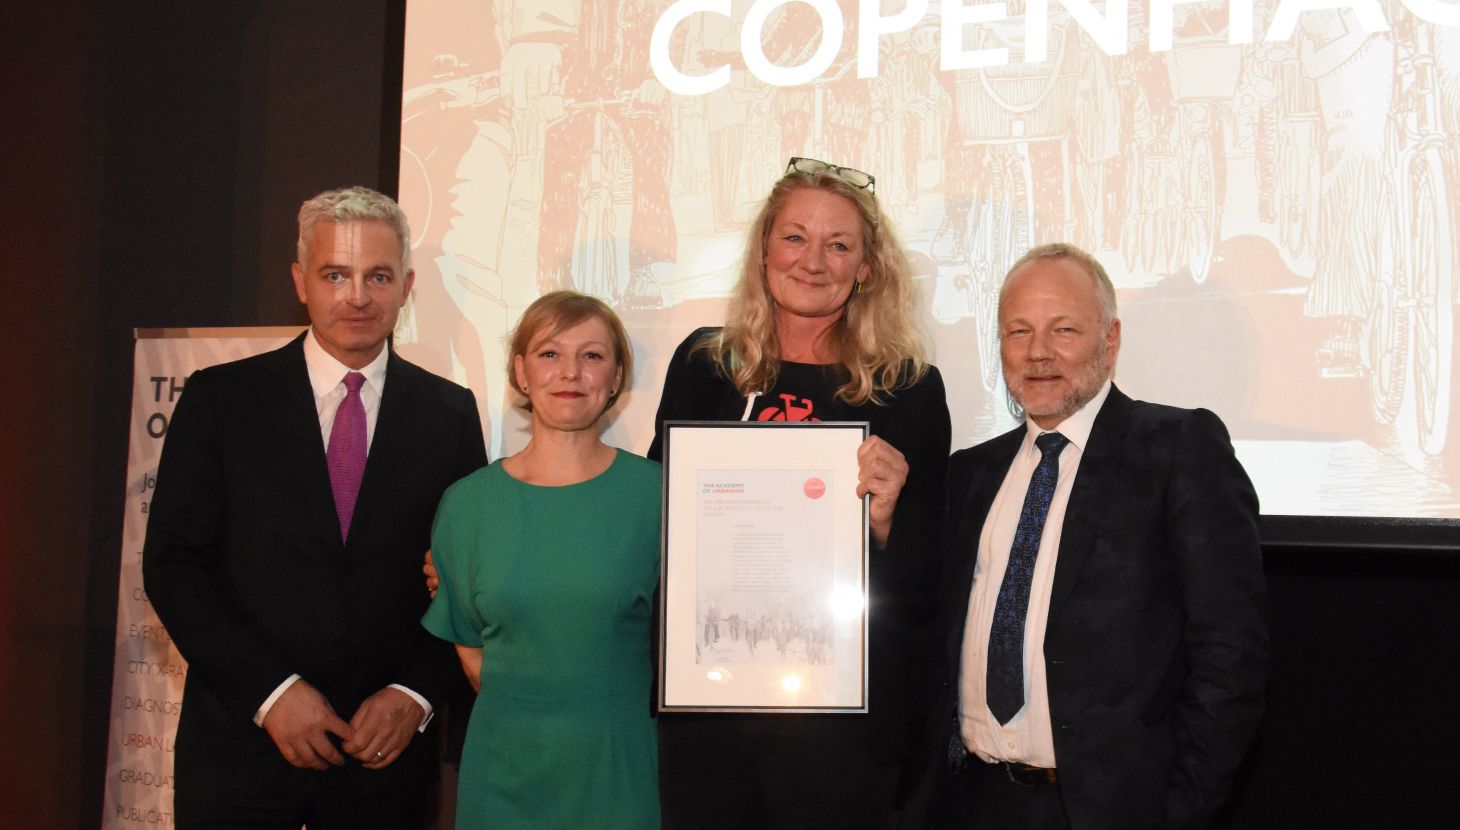 Copenhagen named European city of the year